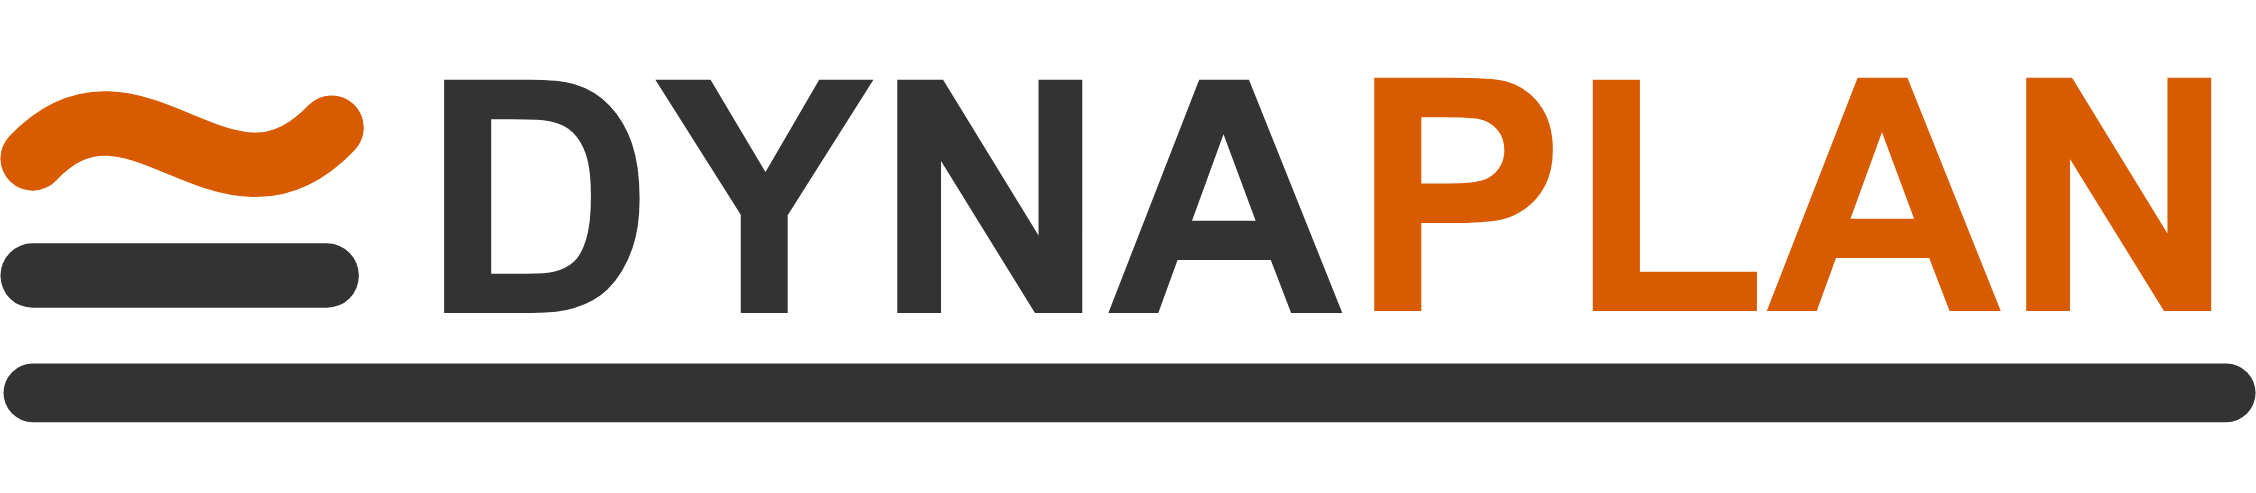 Dynaplan AG Logo